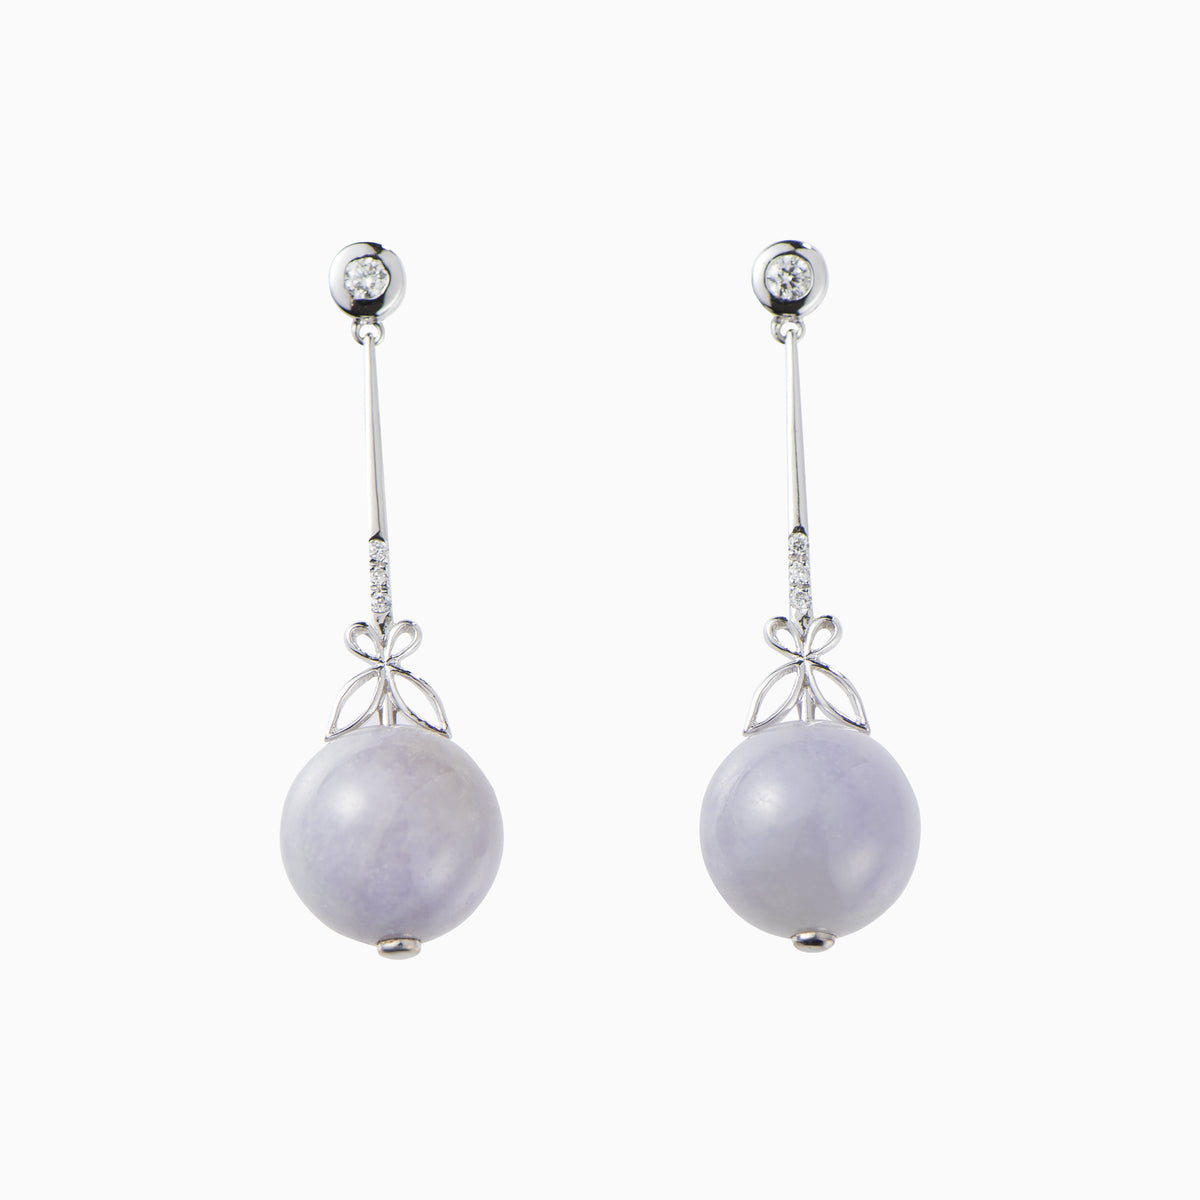 Lavender Jadeite Earrings with diamonds